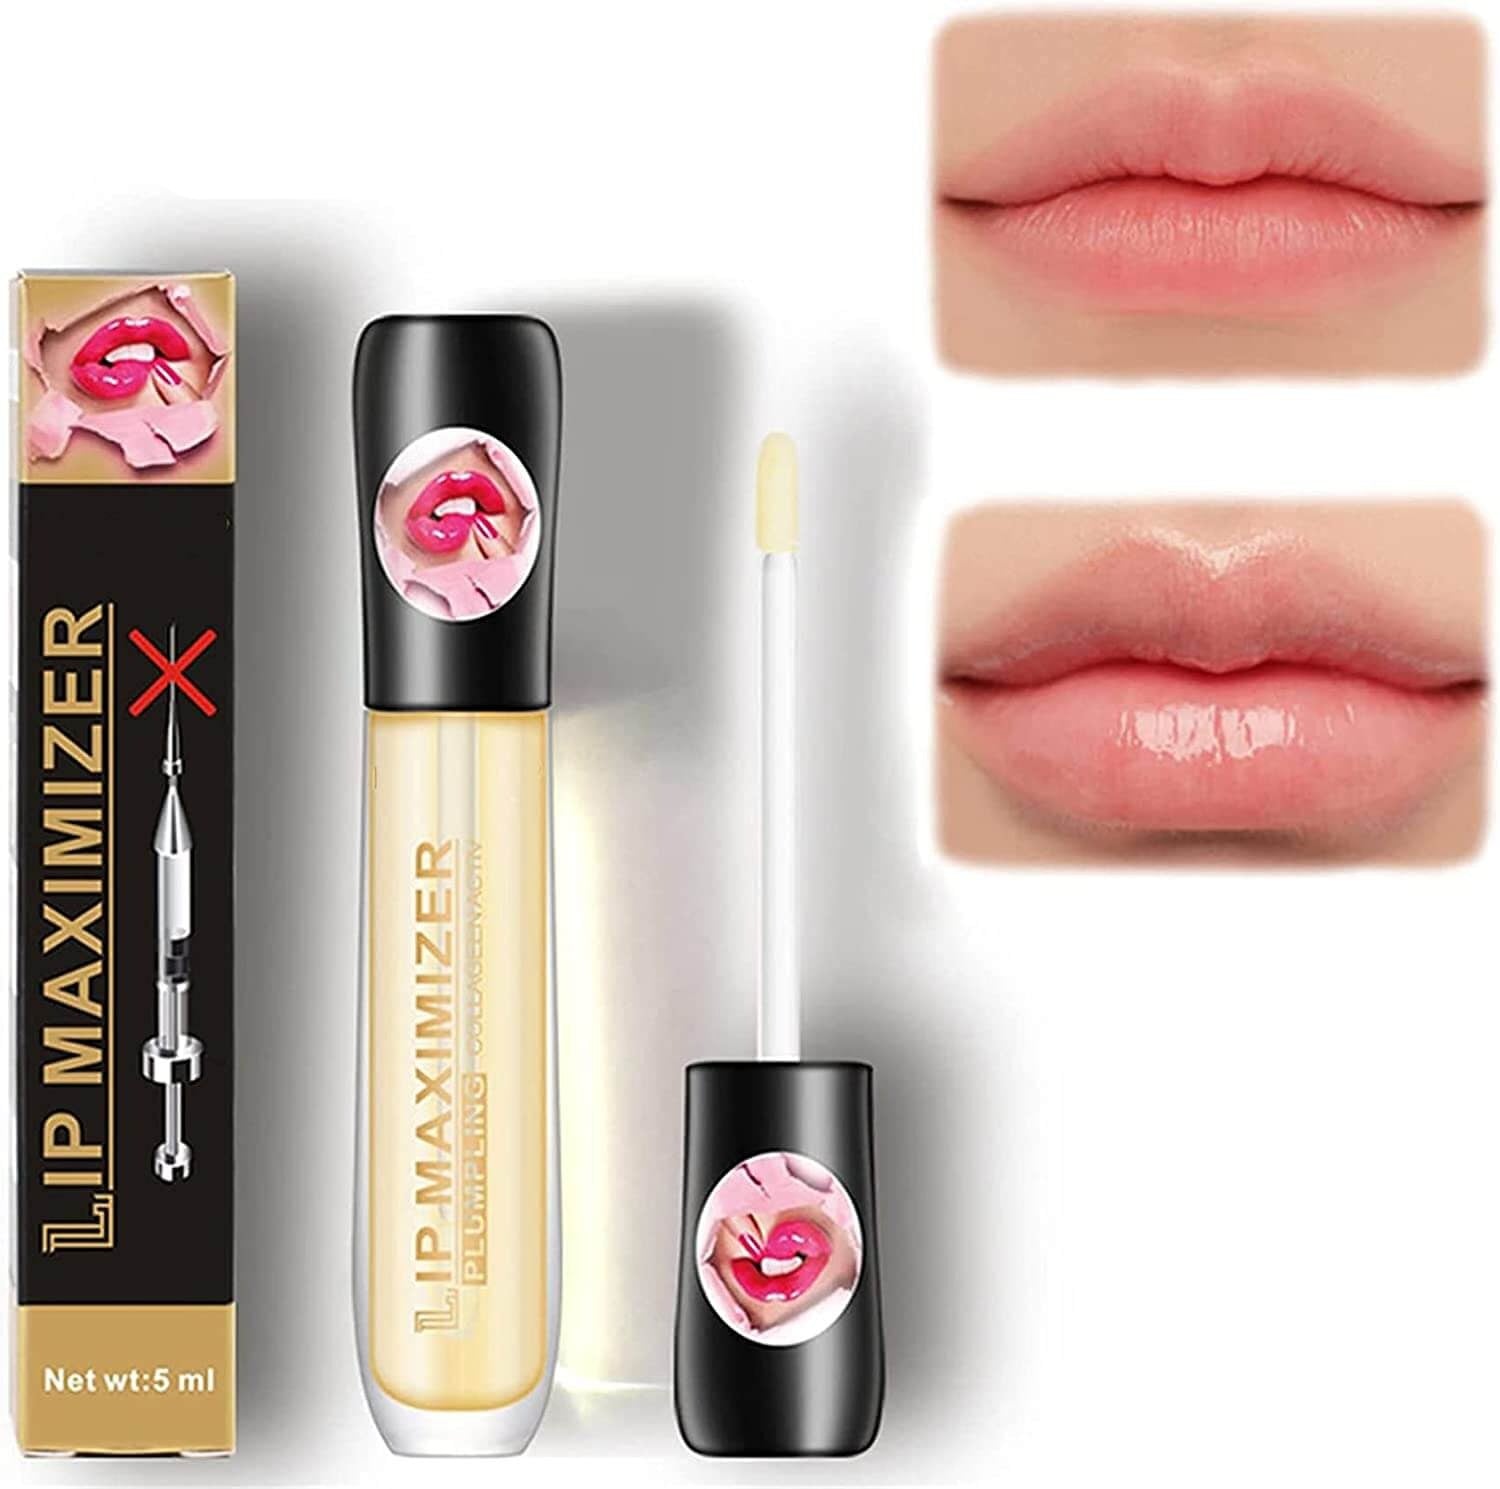 Kiss Beauty™ - Lippen-Maximierer